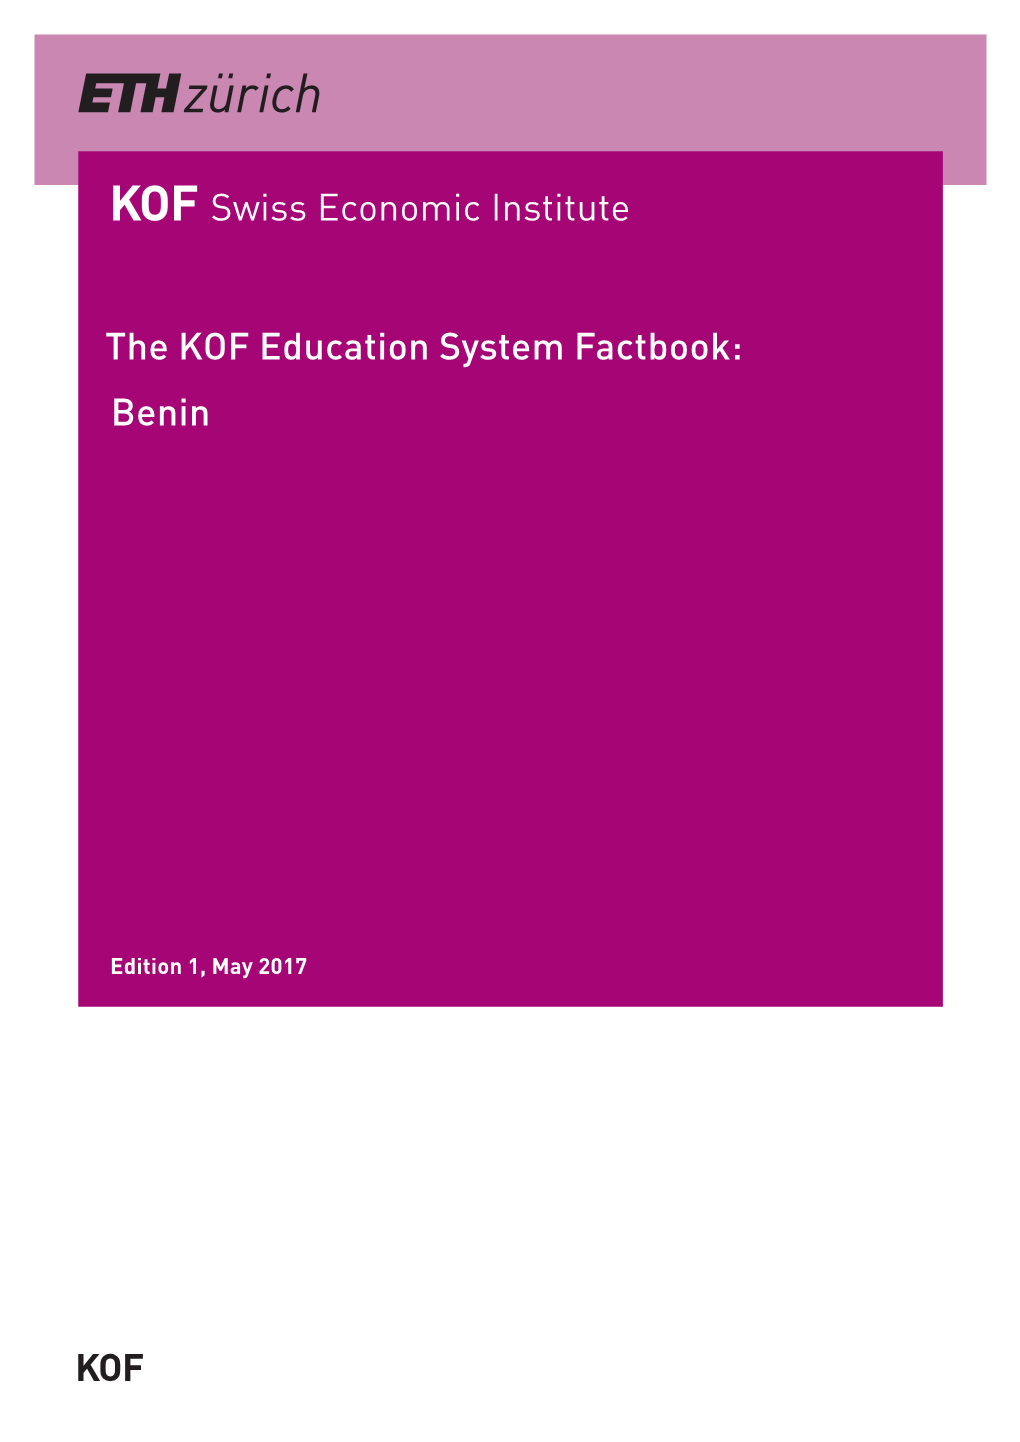 The KOF Education System Factbook: Benin